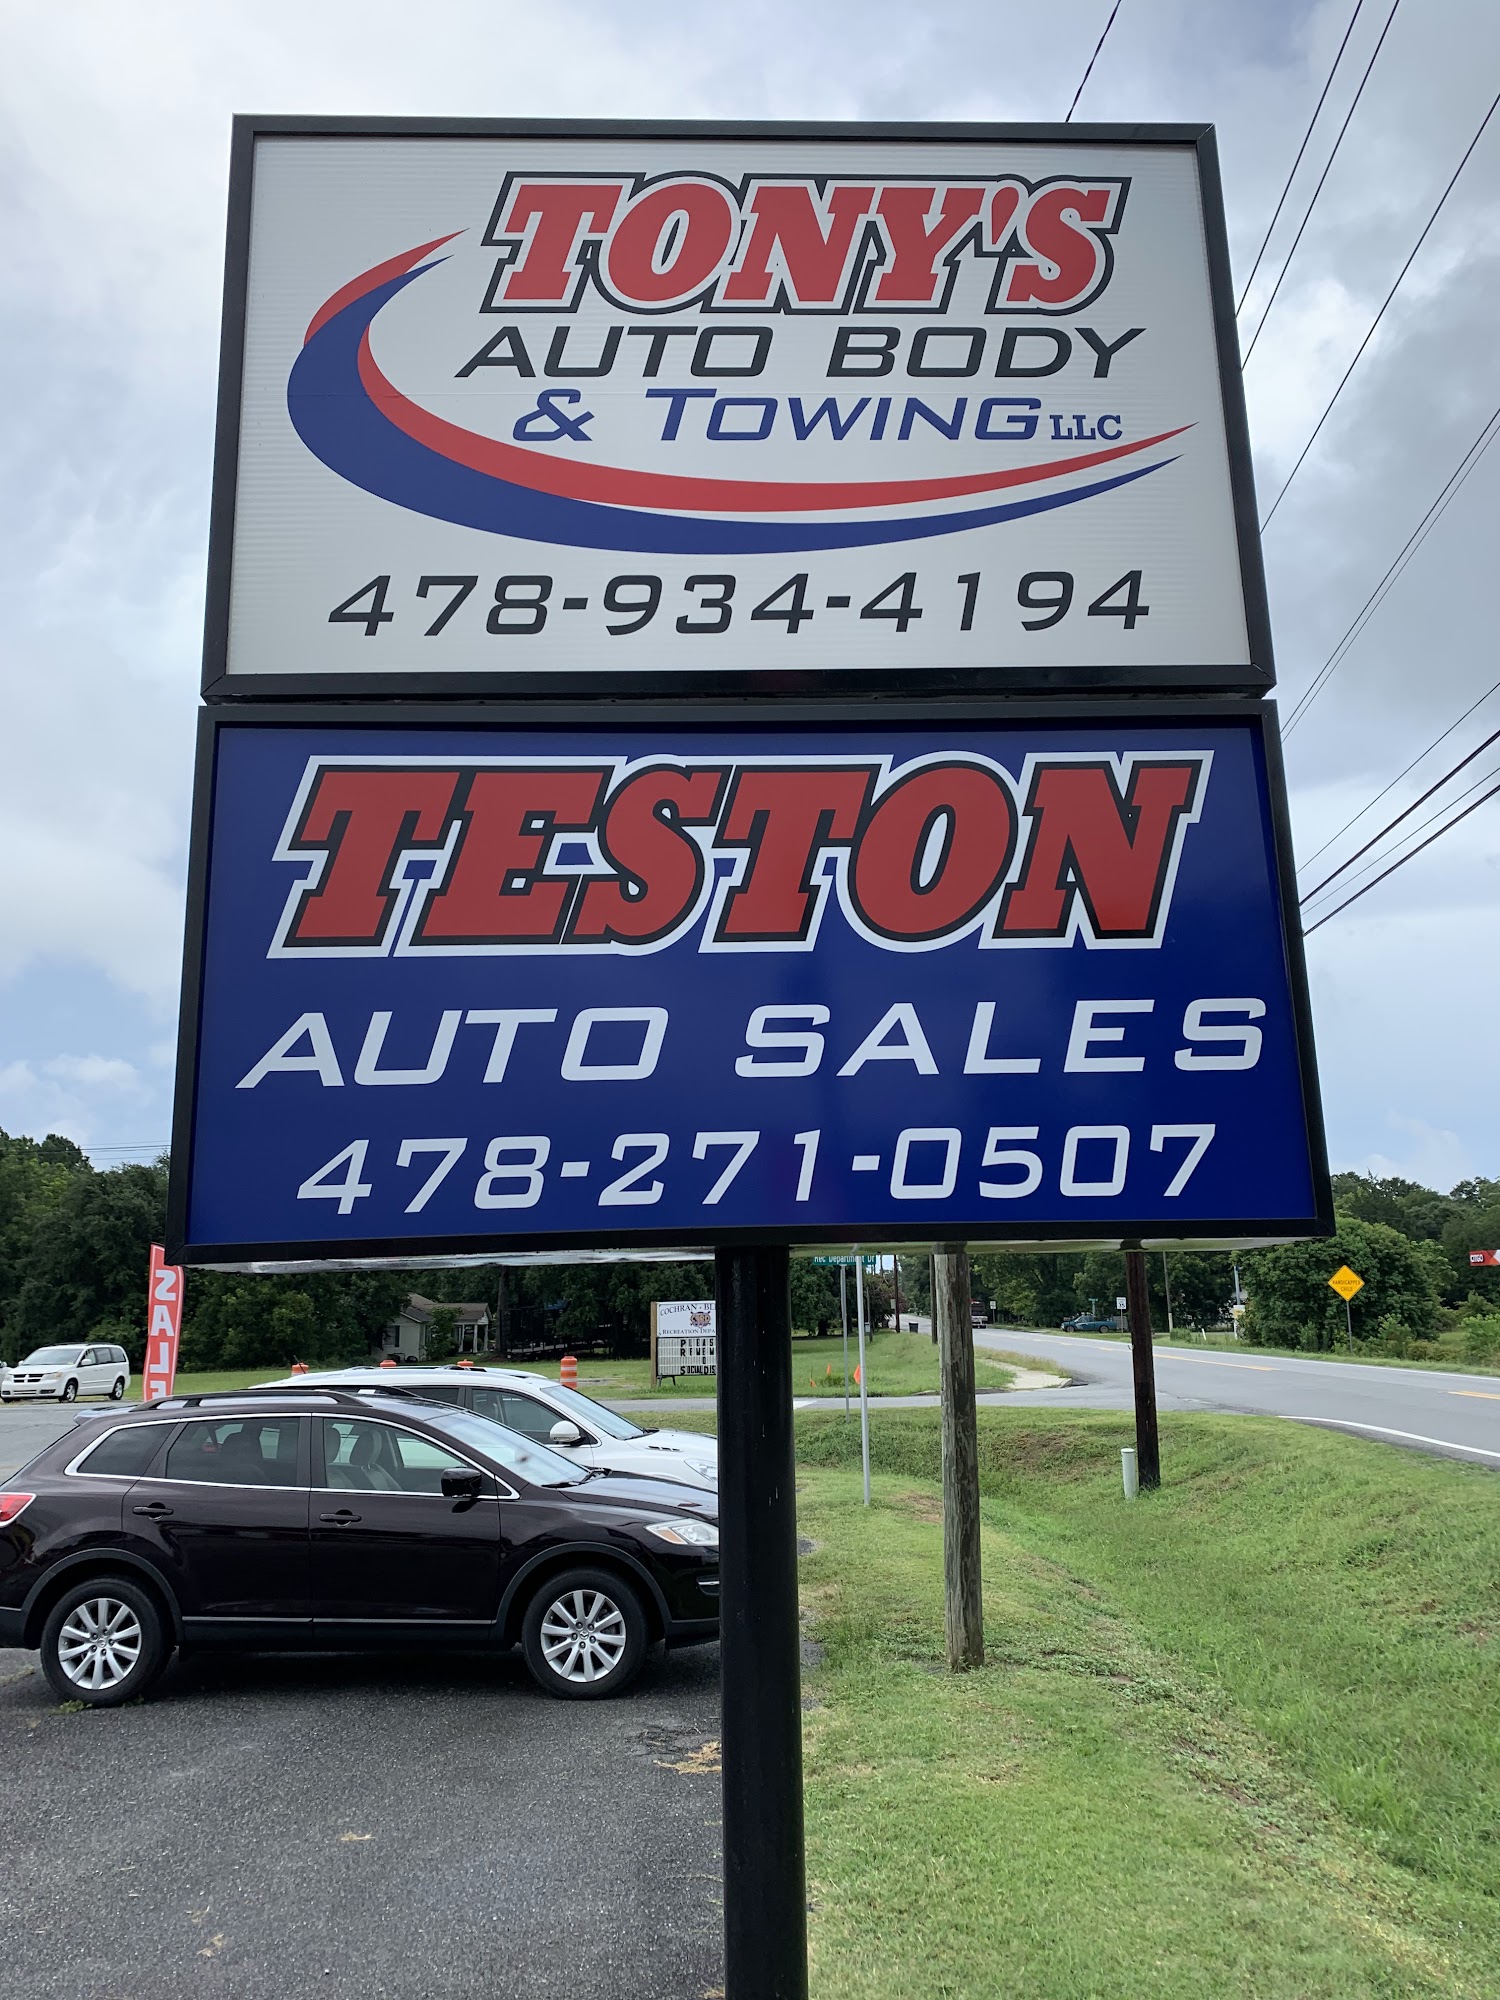 Tony's Auto Body And Towing, LLC Teston Auto Sales